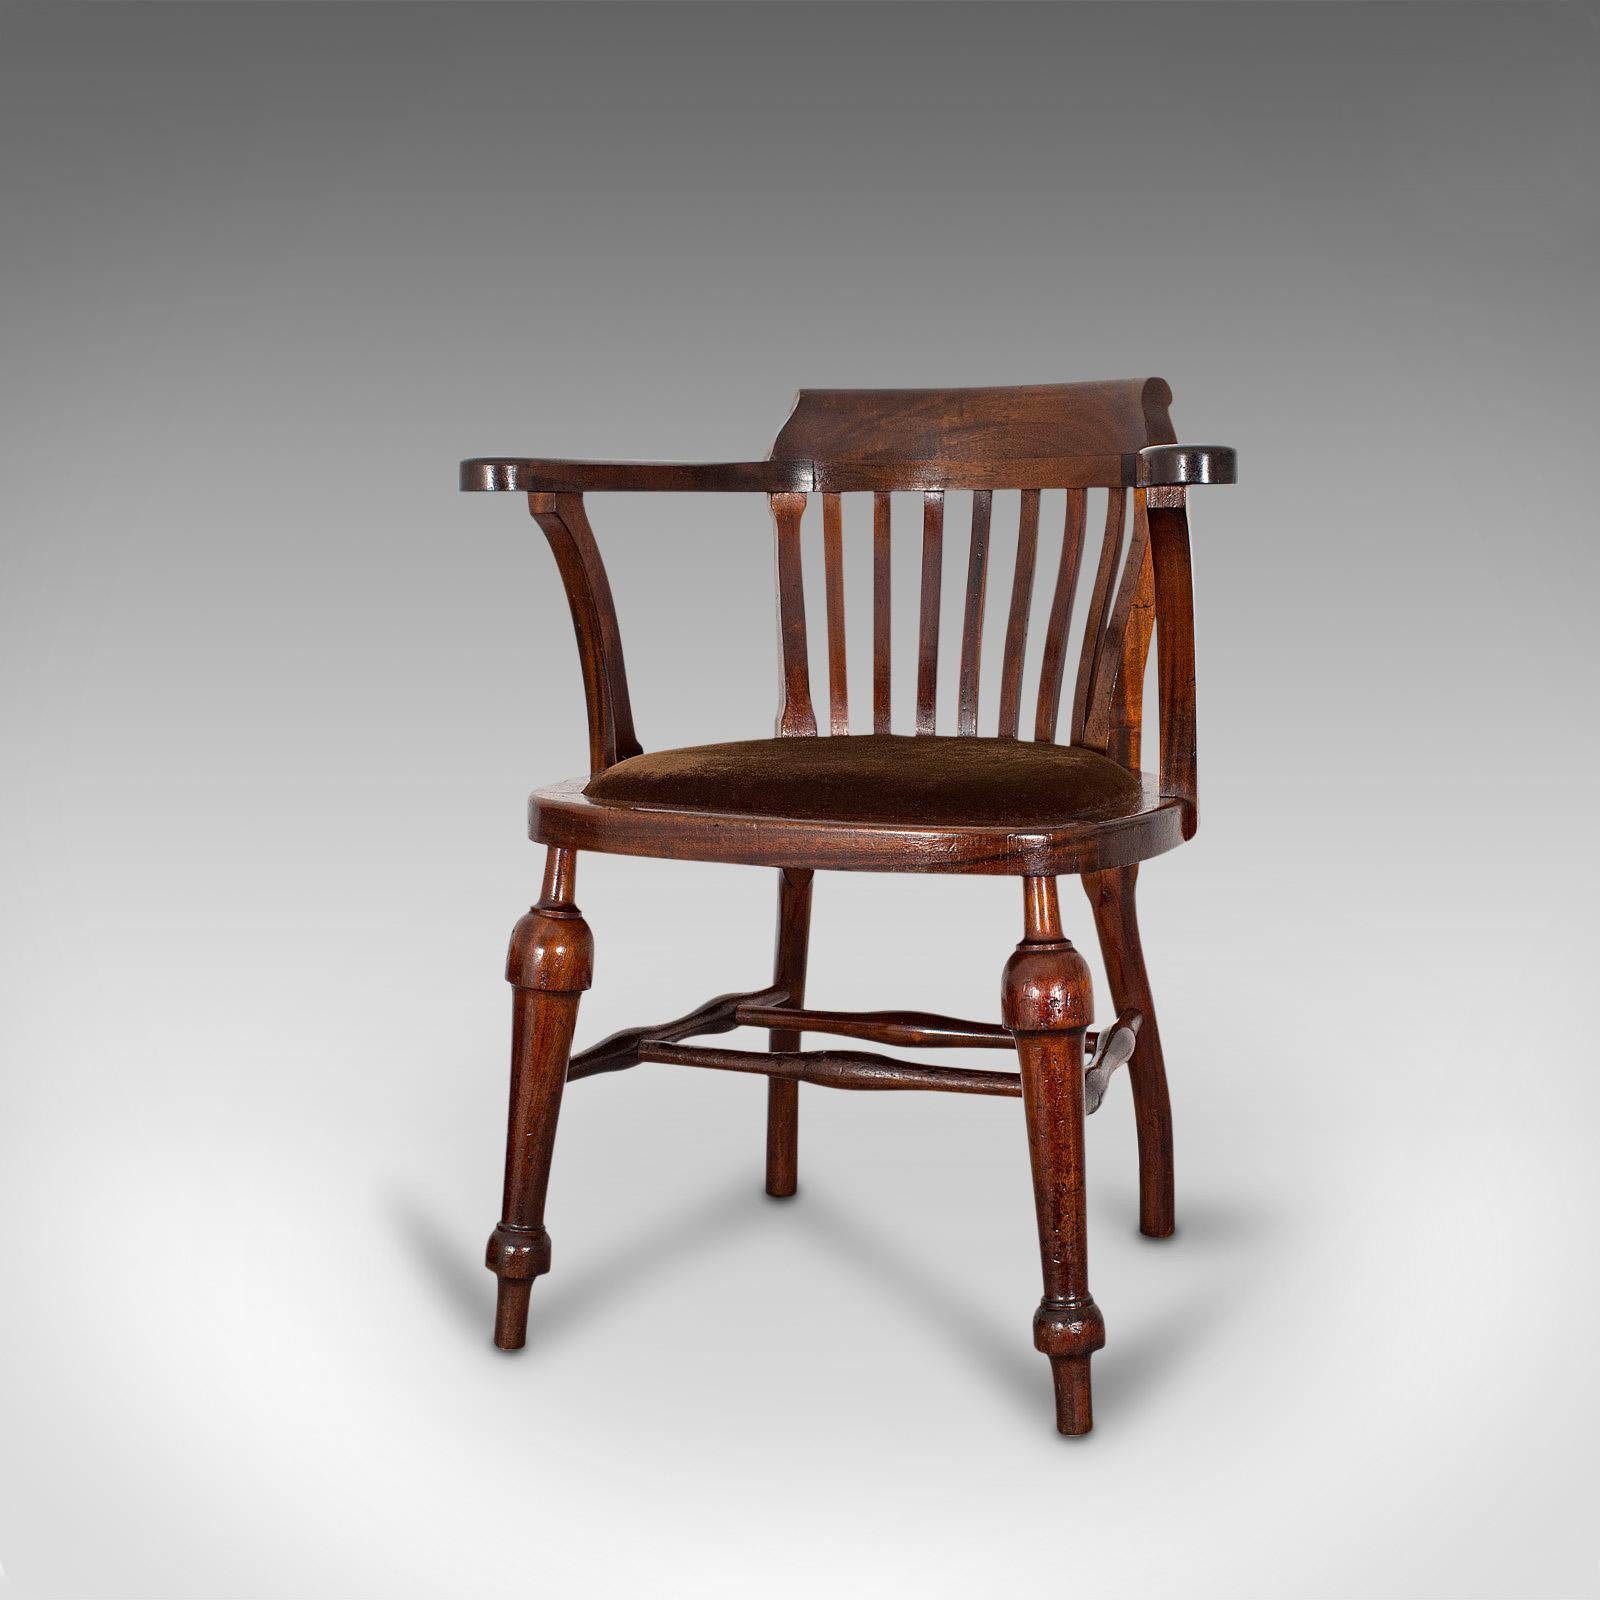 British Antique Captain's Chair, English, Mahogany, Armchair, Seat, Edwardian circa 1910